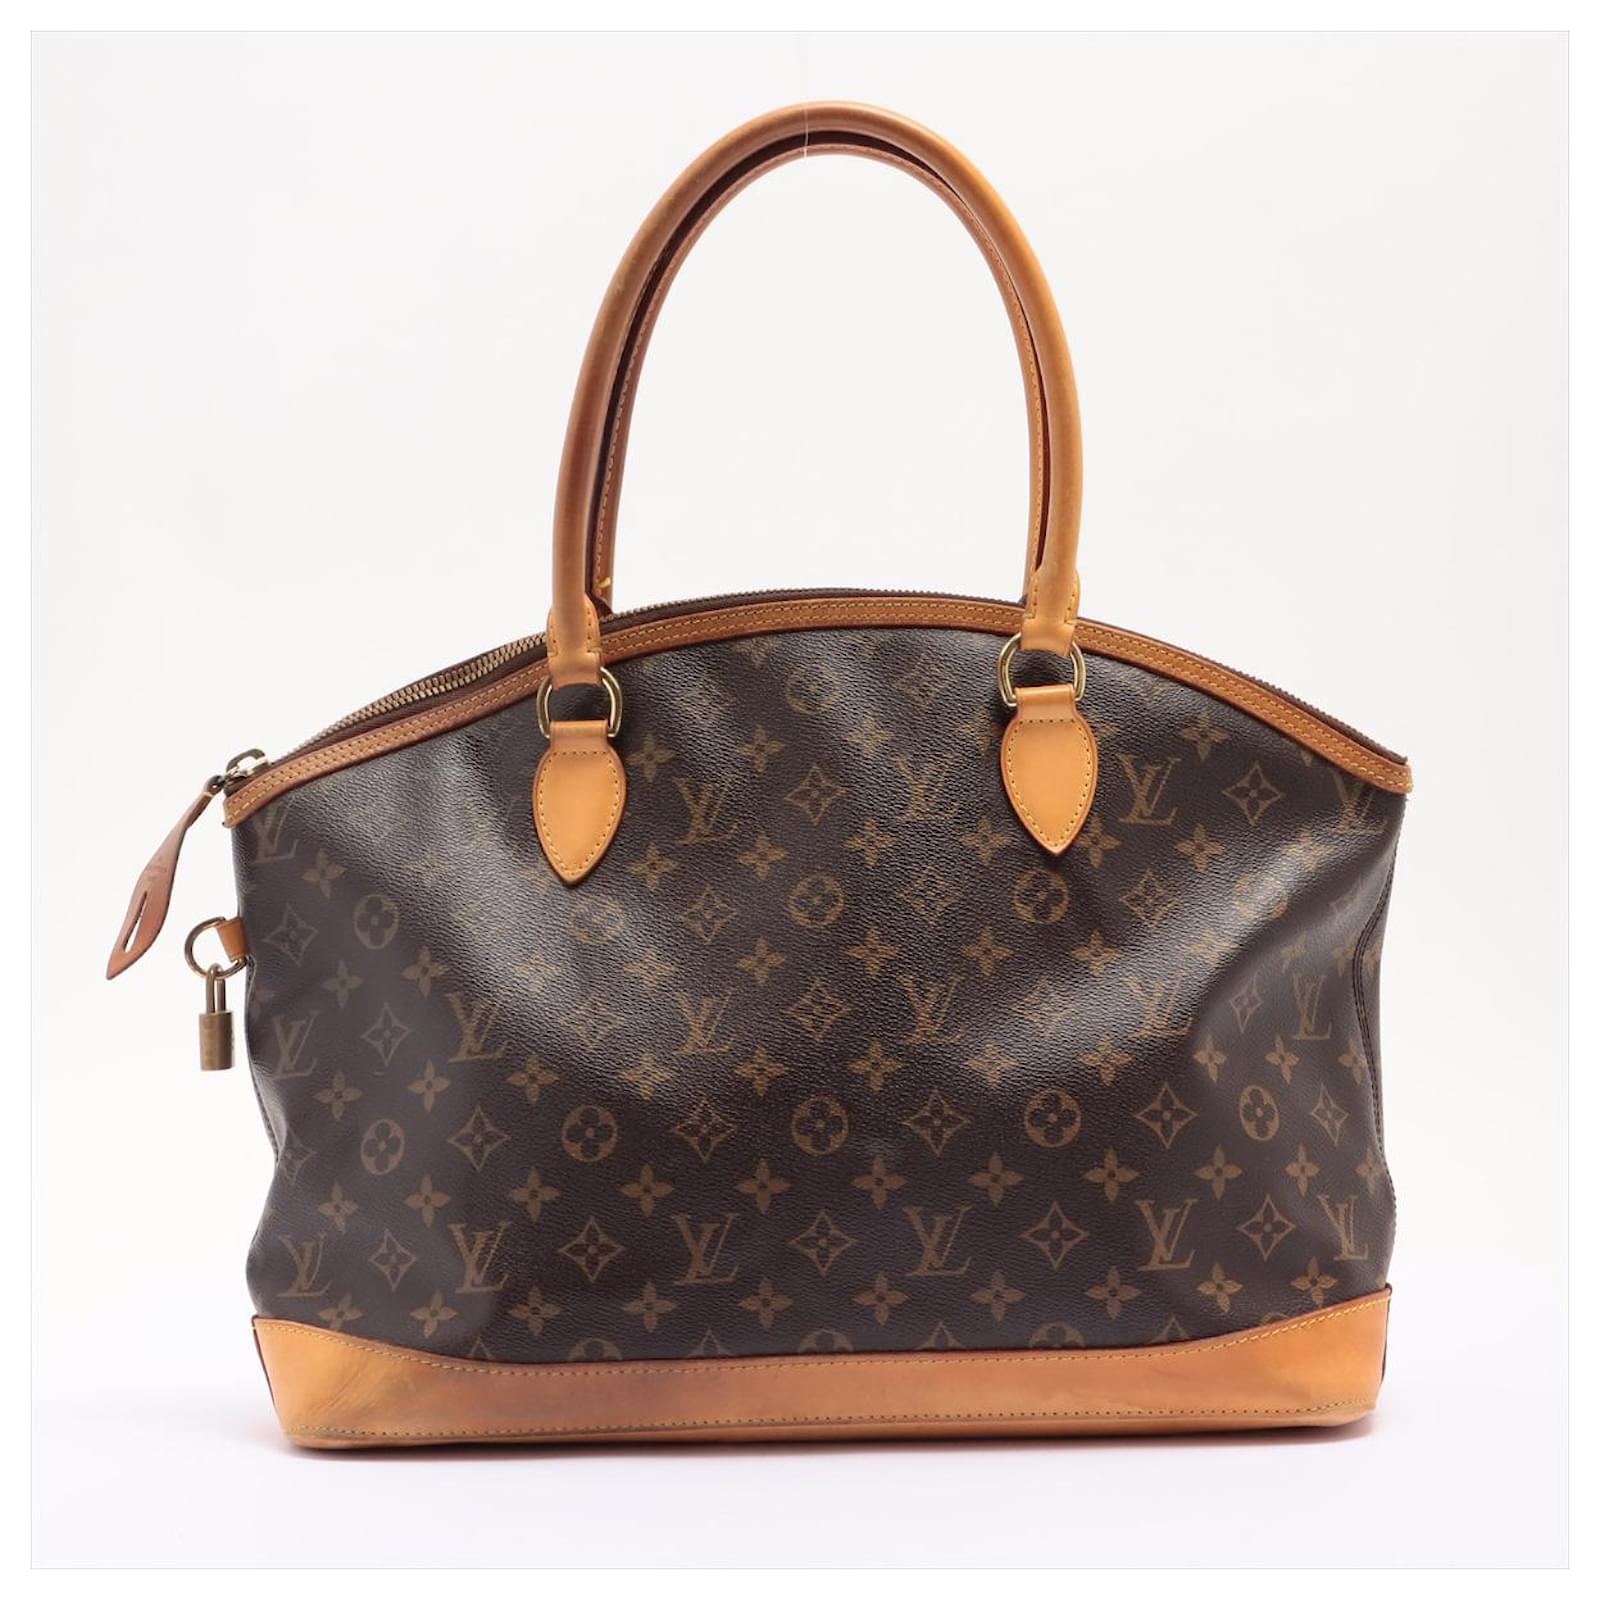 Used Louis Vuitton Lockit Handbags - Joli Closet